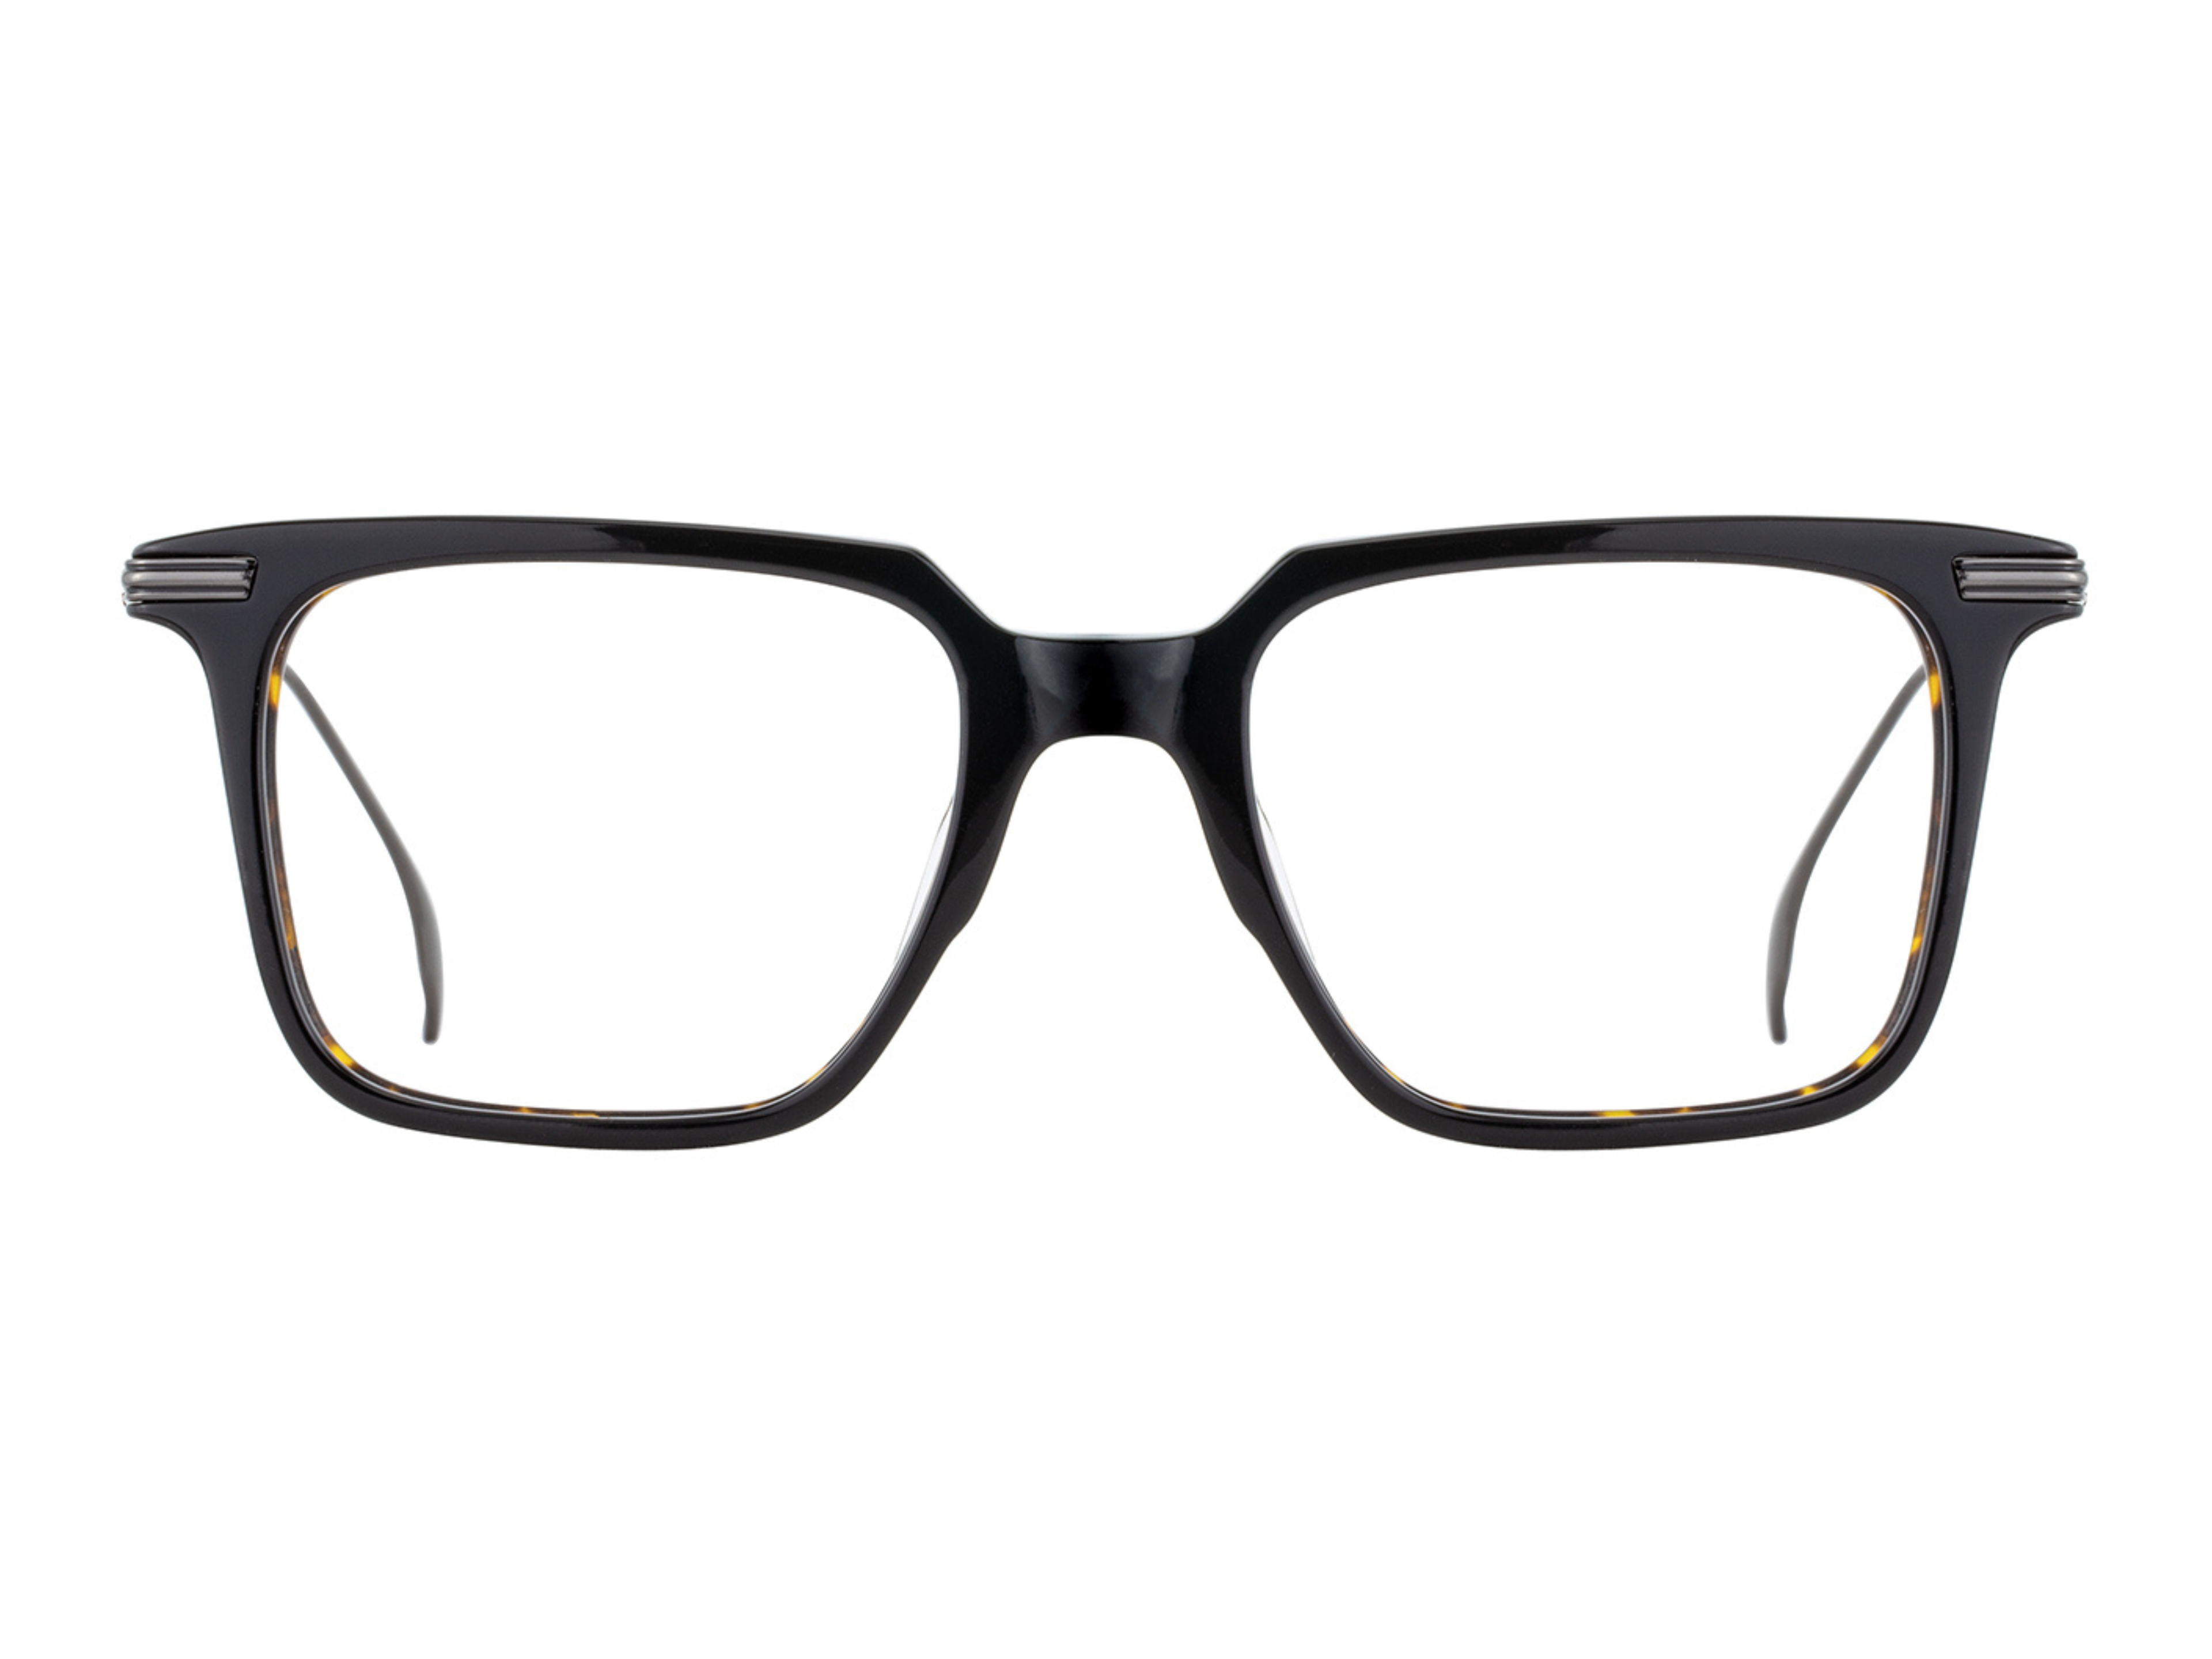 Aomori_eyeglass_frames_black_tortoise_gunmeta